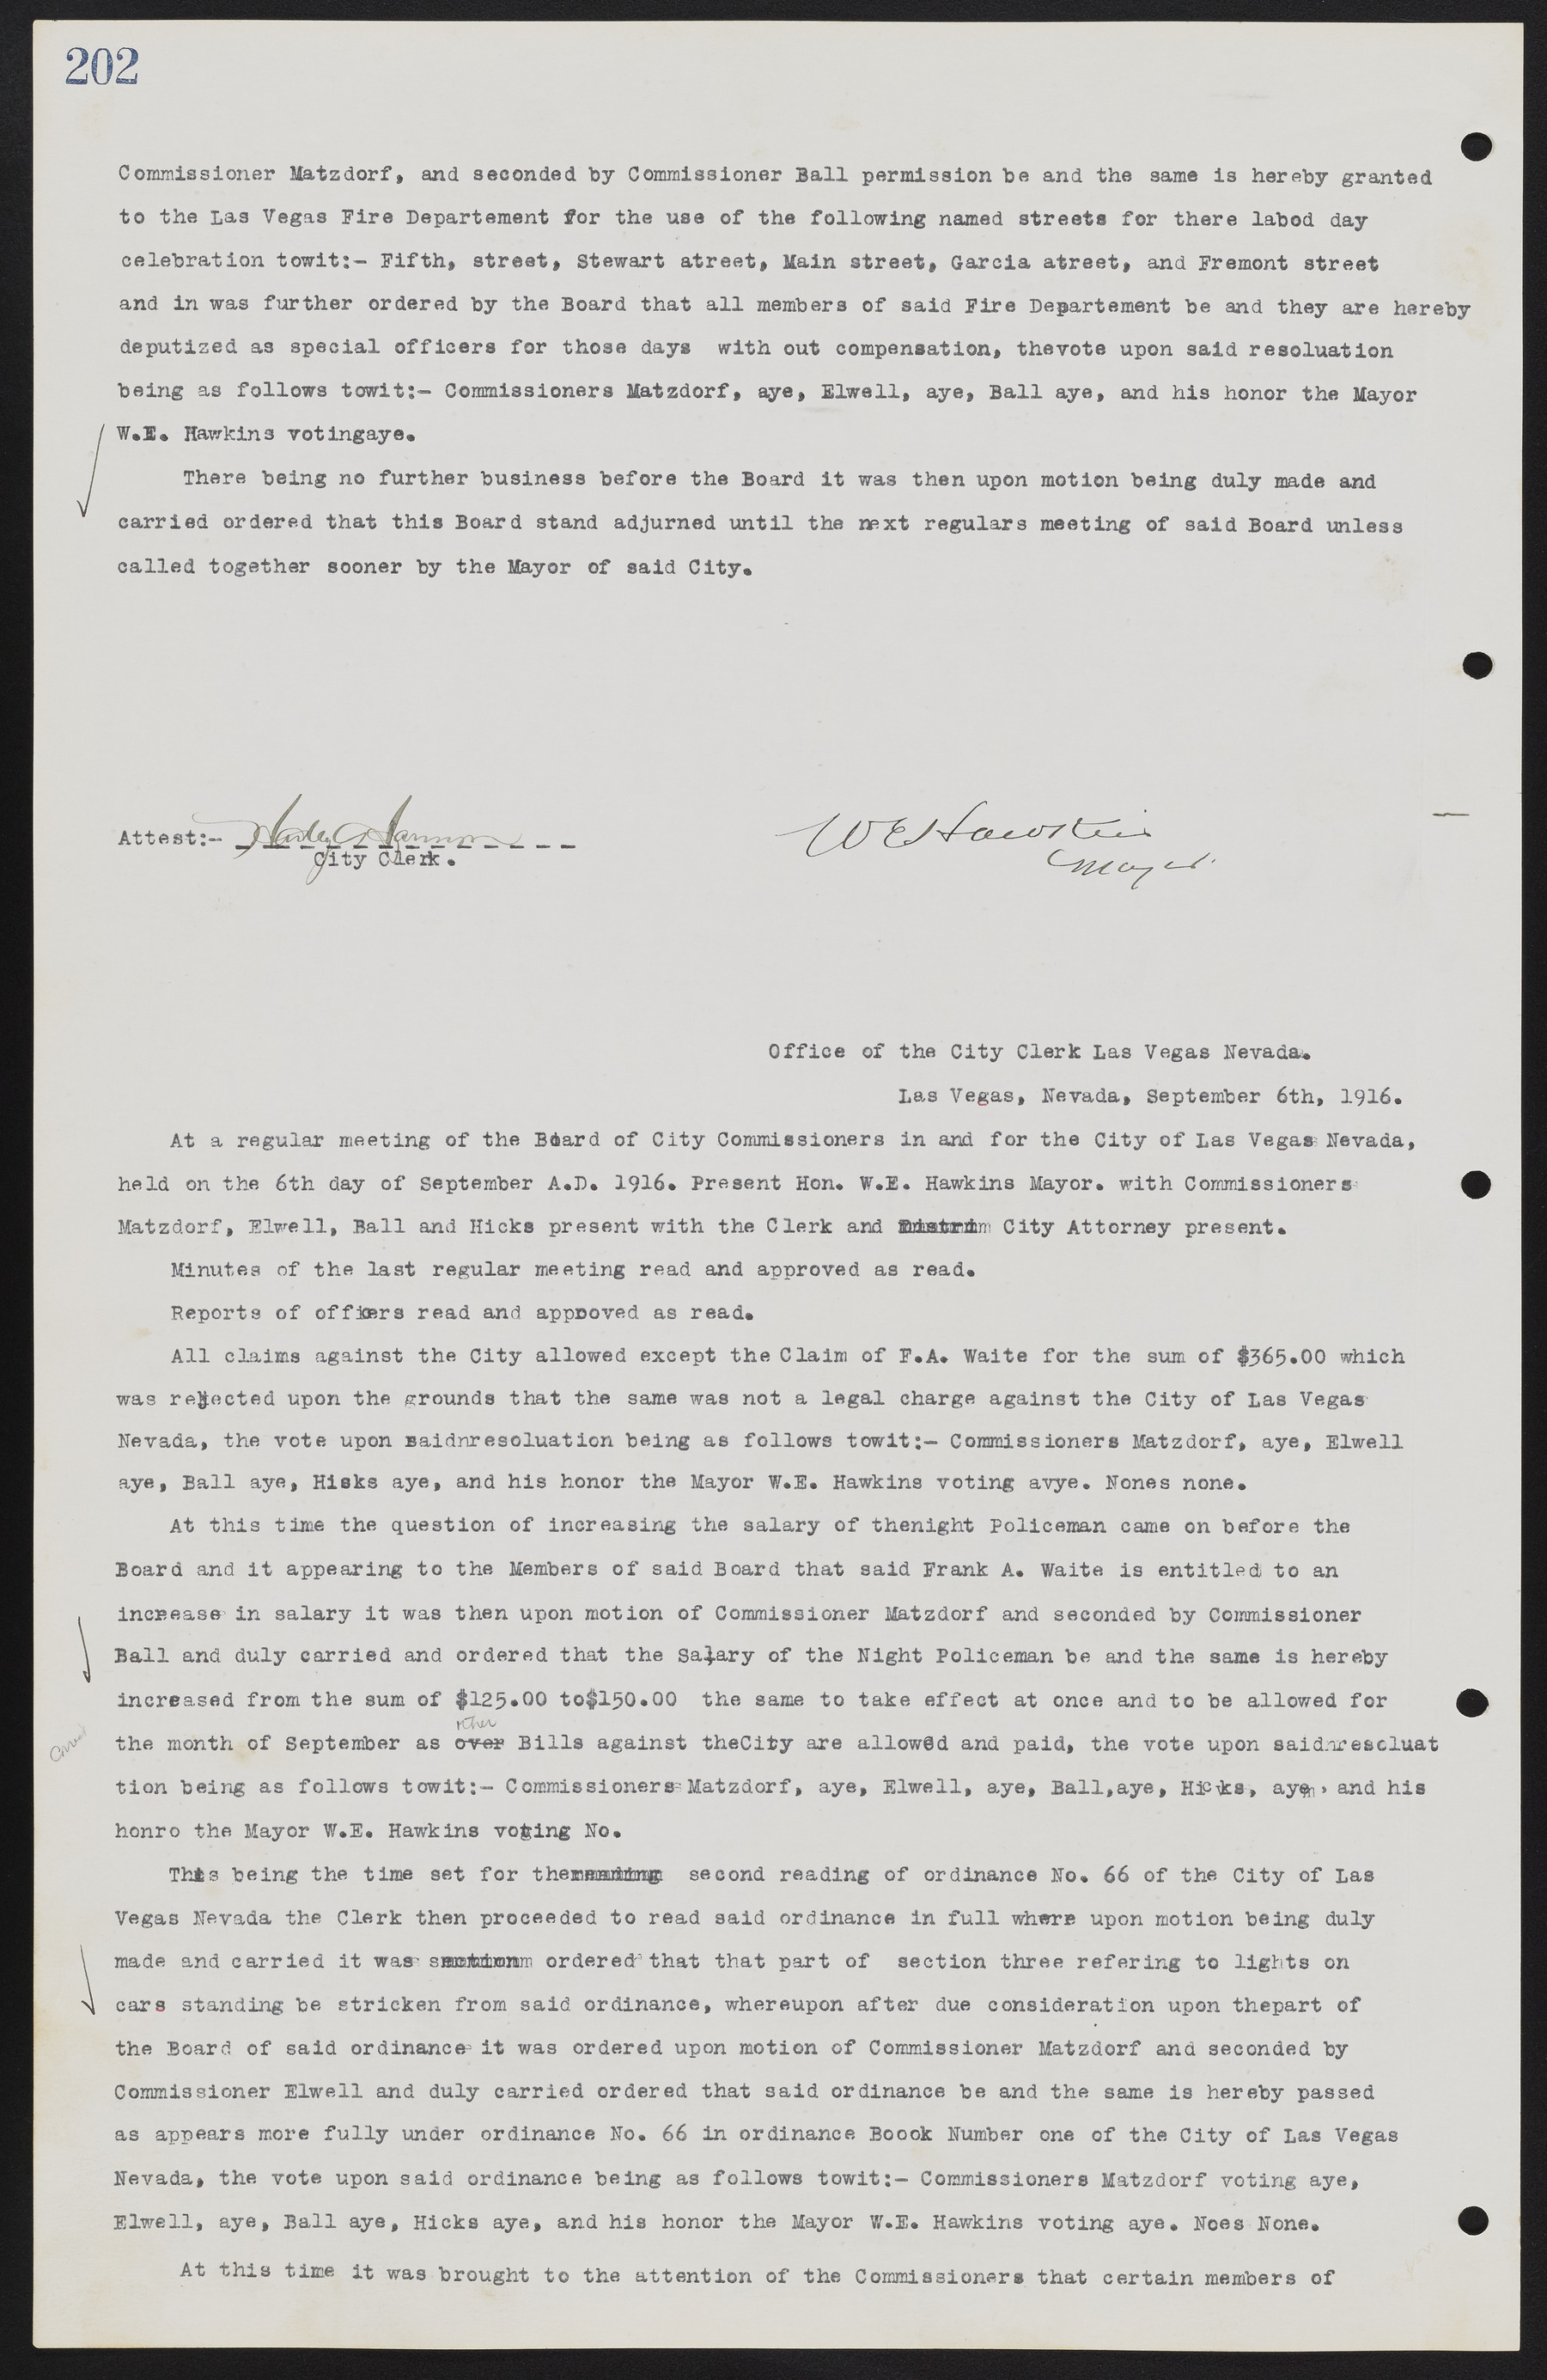 Las Vegas City Commission Minutes, June 22, 1911 to February 7, 1922, lvc000001-218